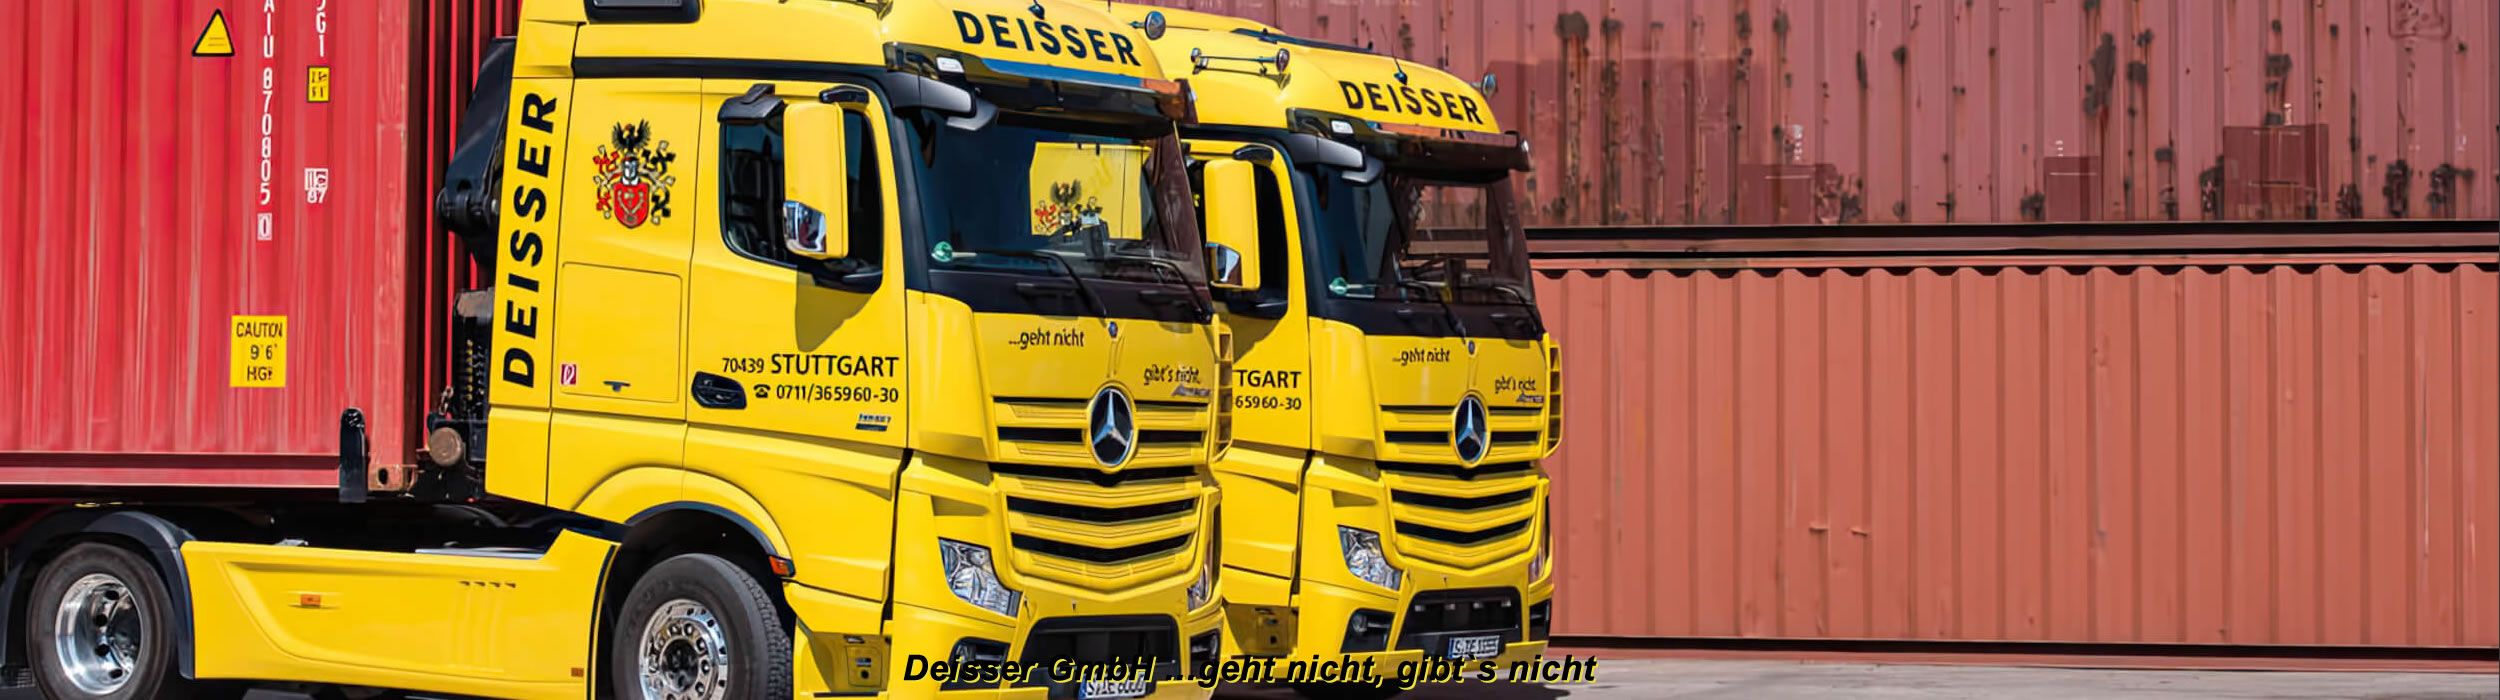 Deisser GmbH / Transportlogistik Seecontainer / Fuhrpark